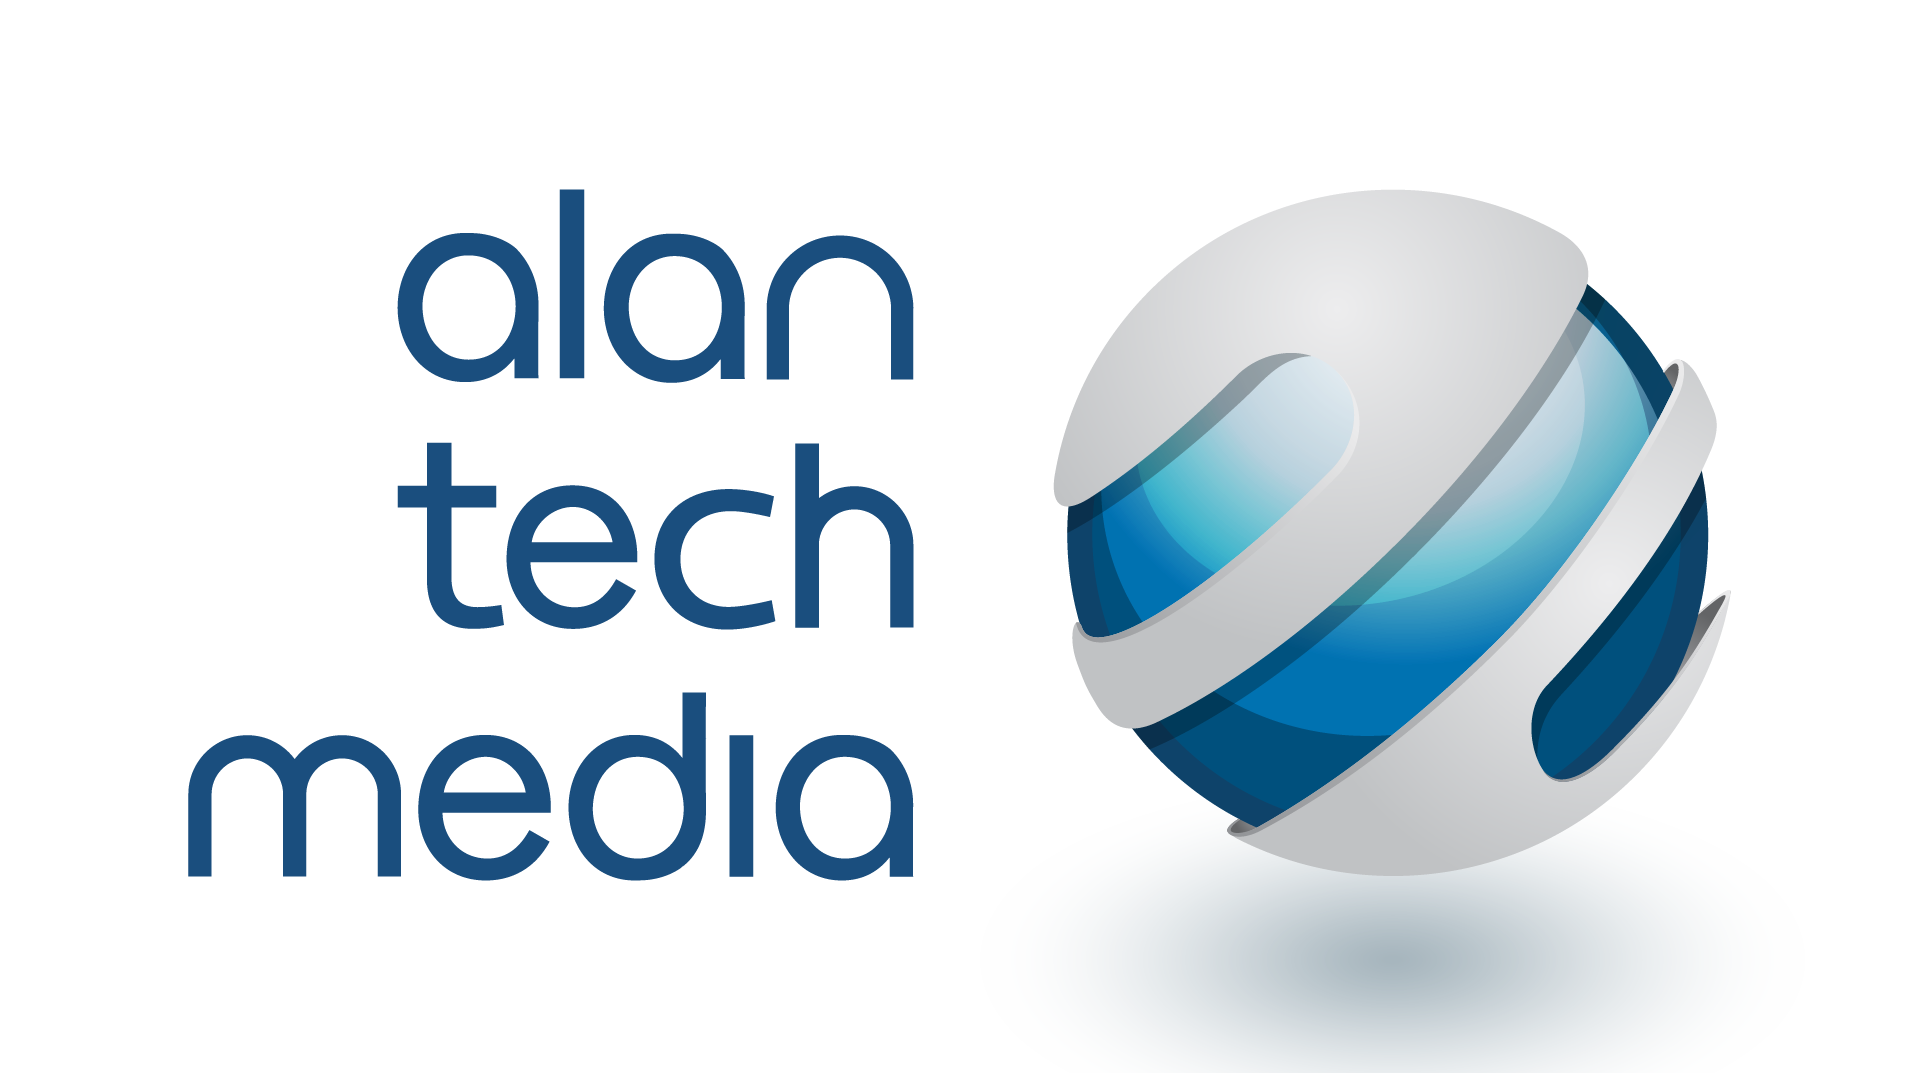 Alan Tech Media